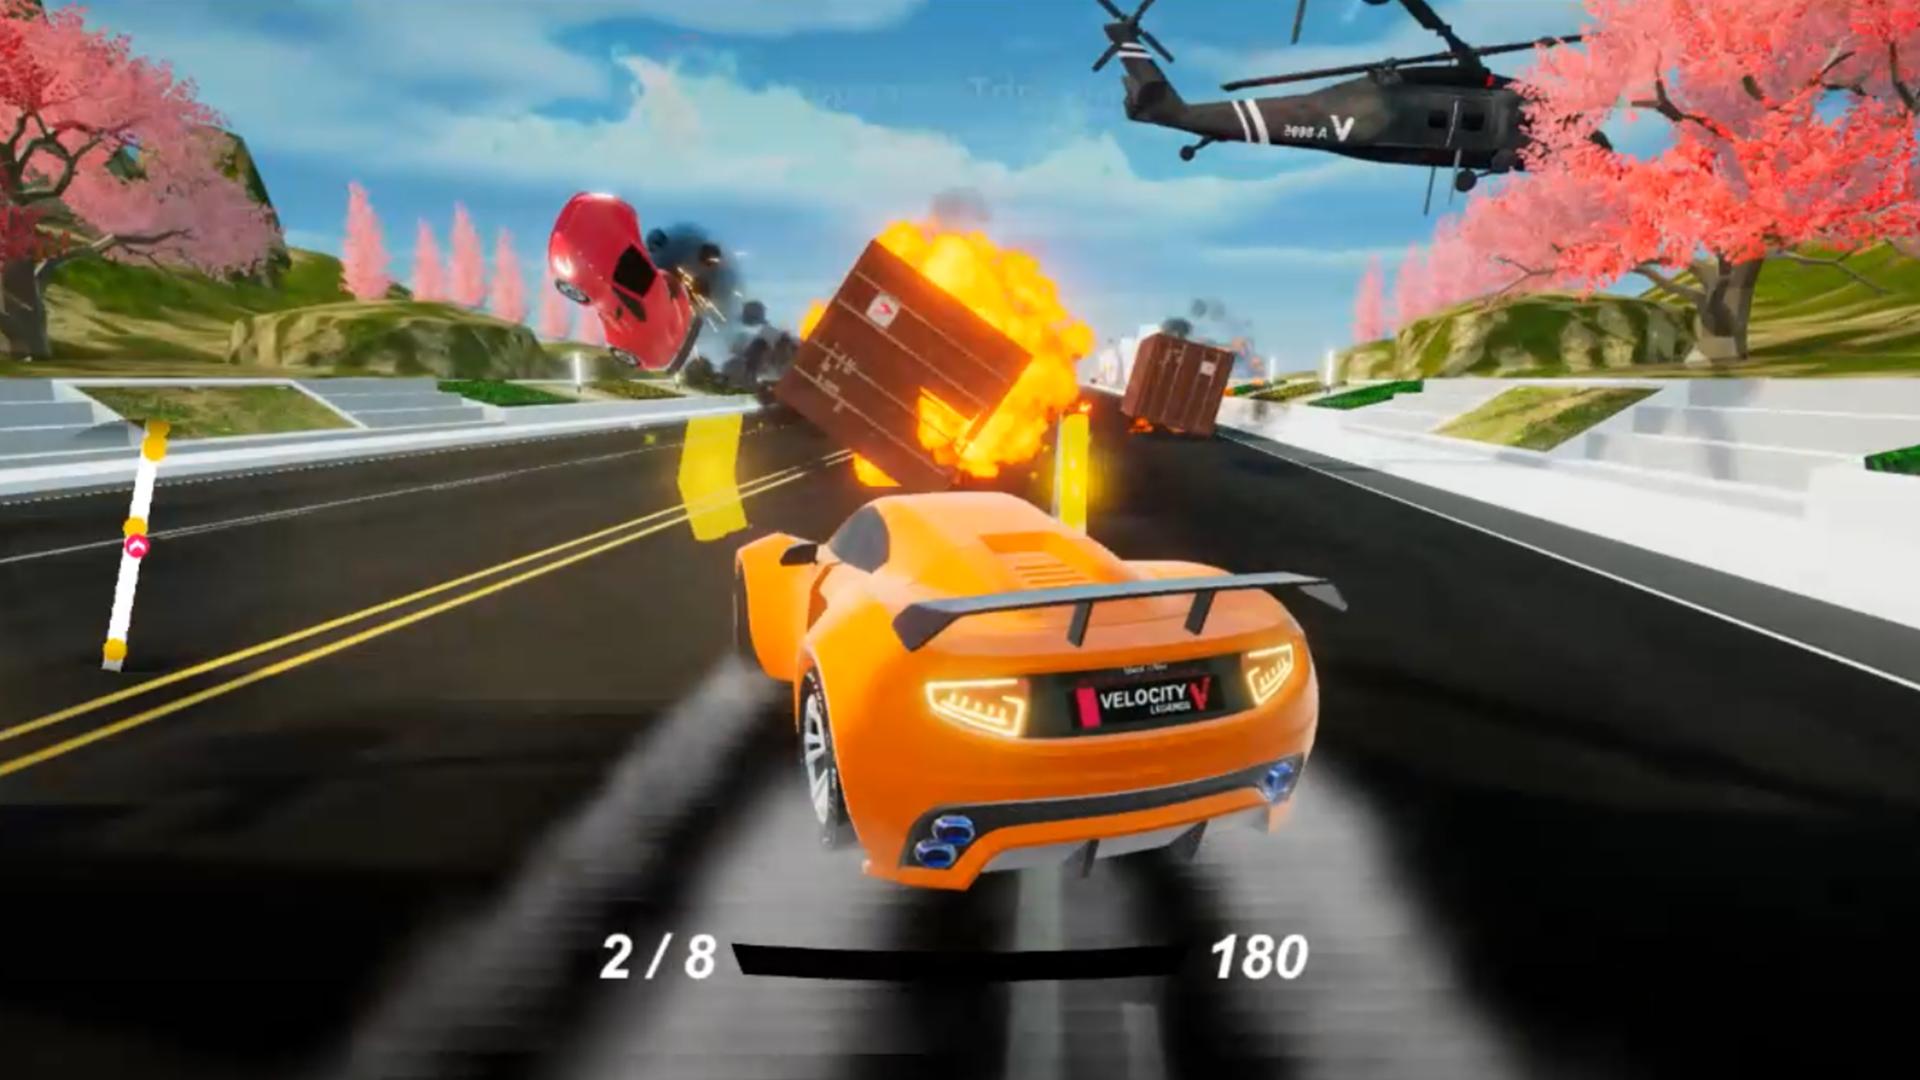 Velocity Legends Asphalt Car Action Racing Game 1.43 Screenshot 12